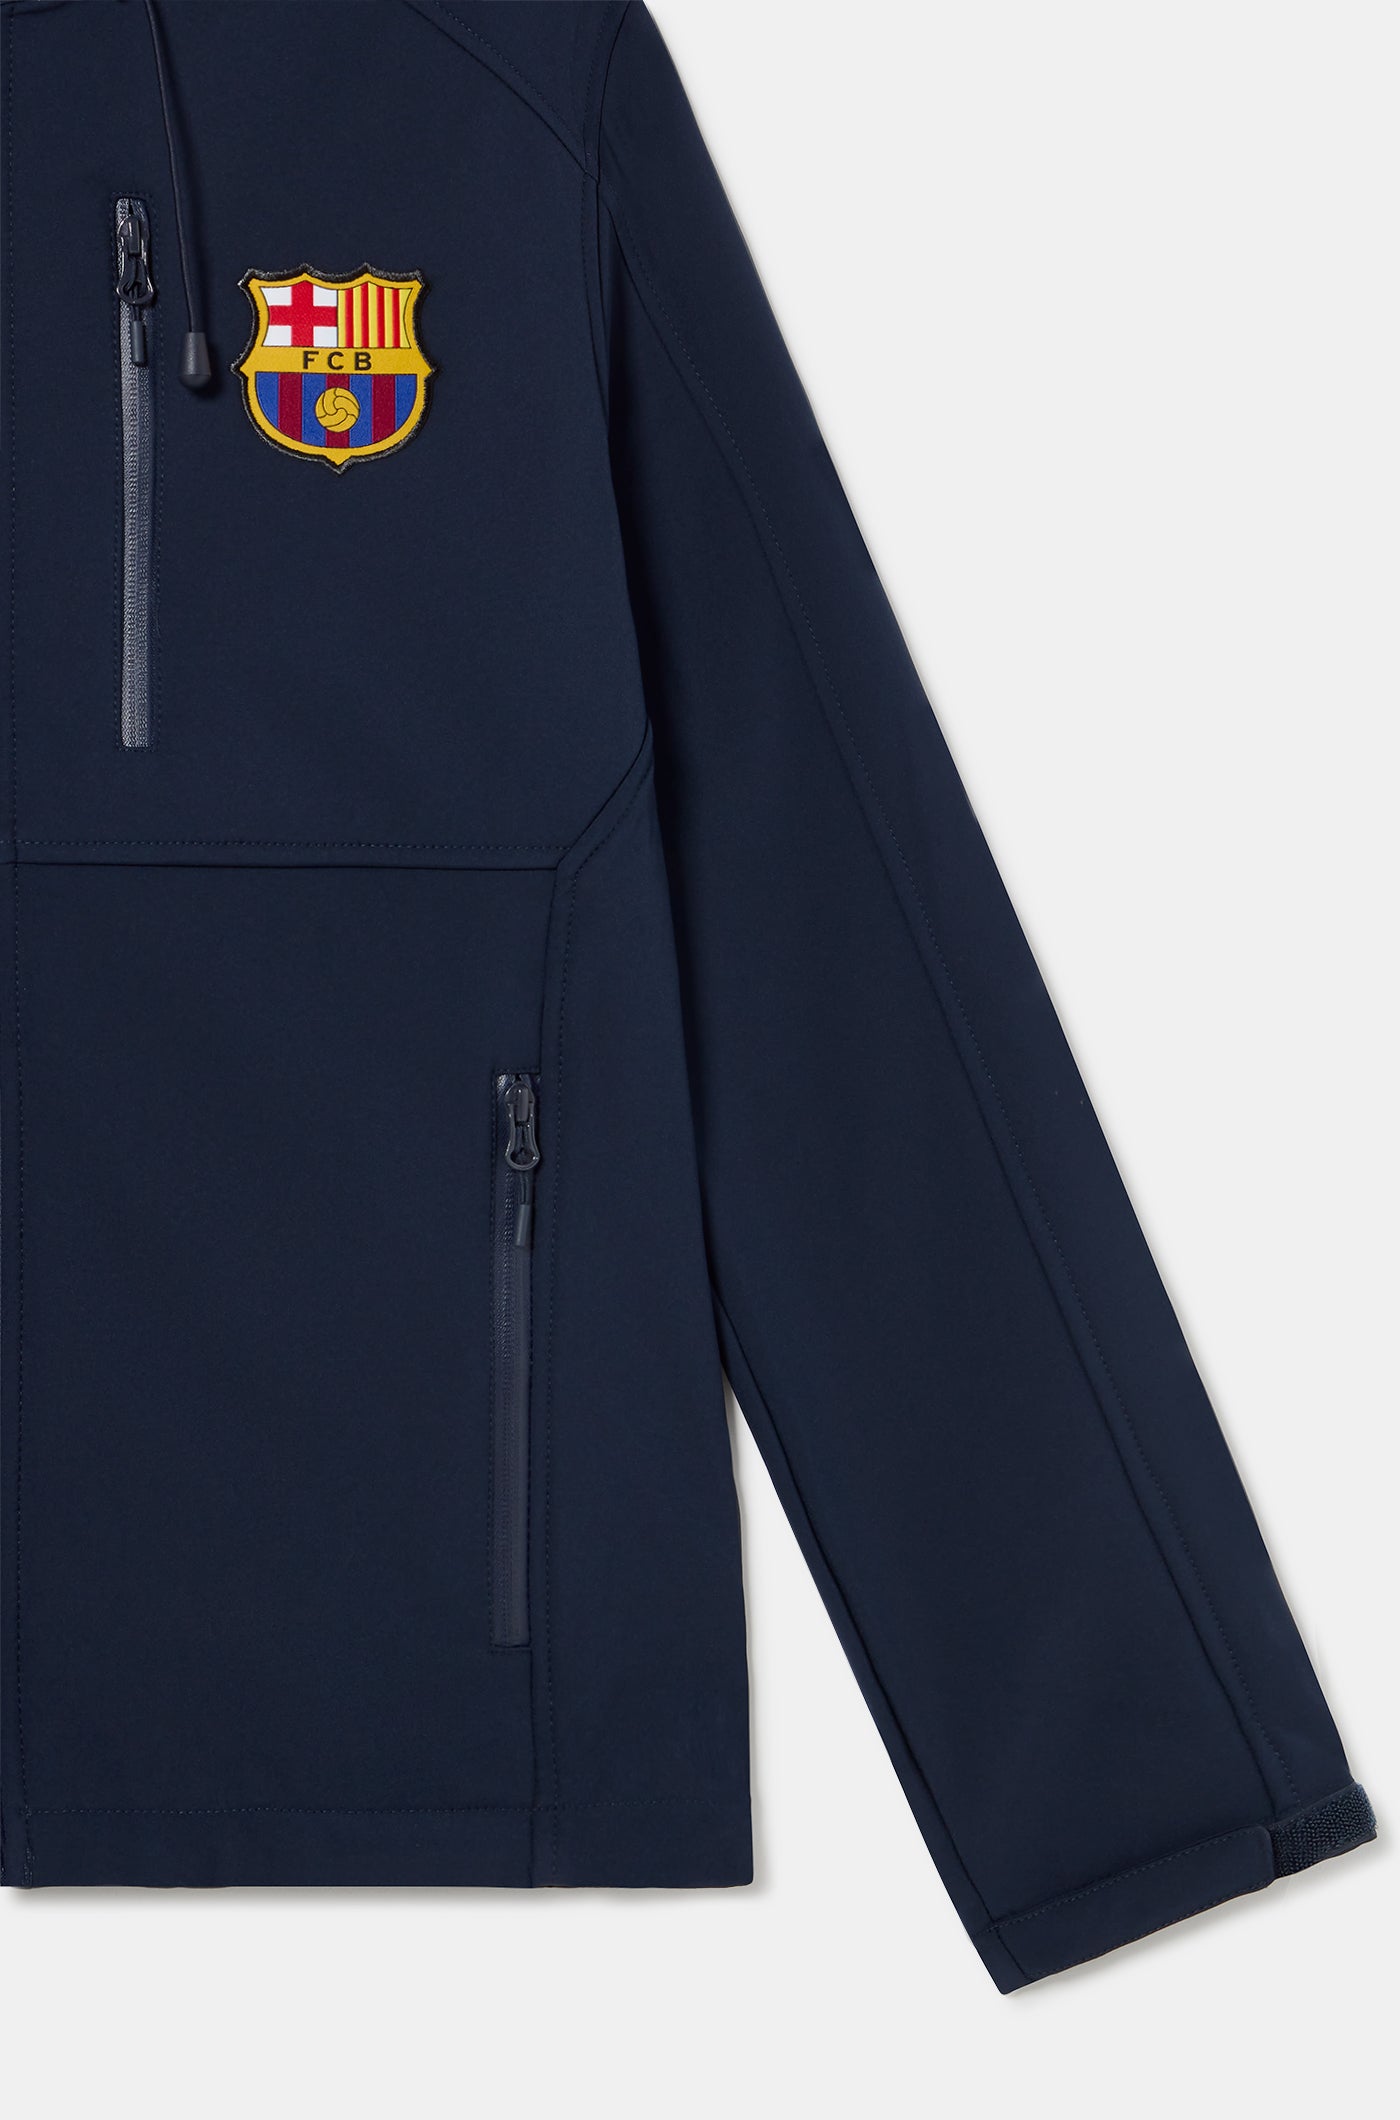 Chaqueta Softshell con capucha FC Barcelona